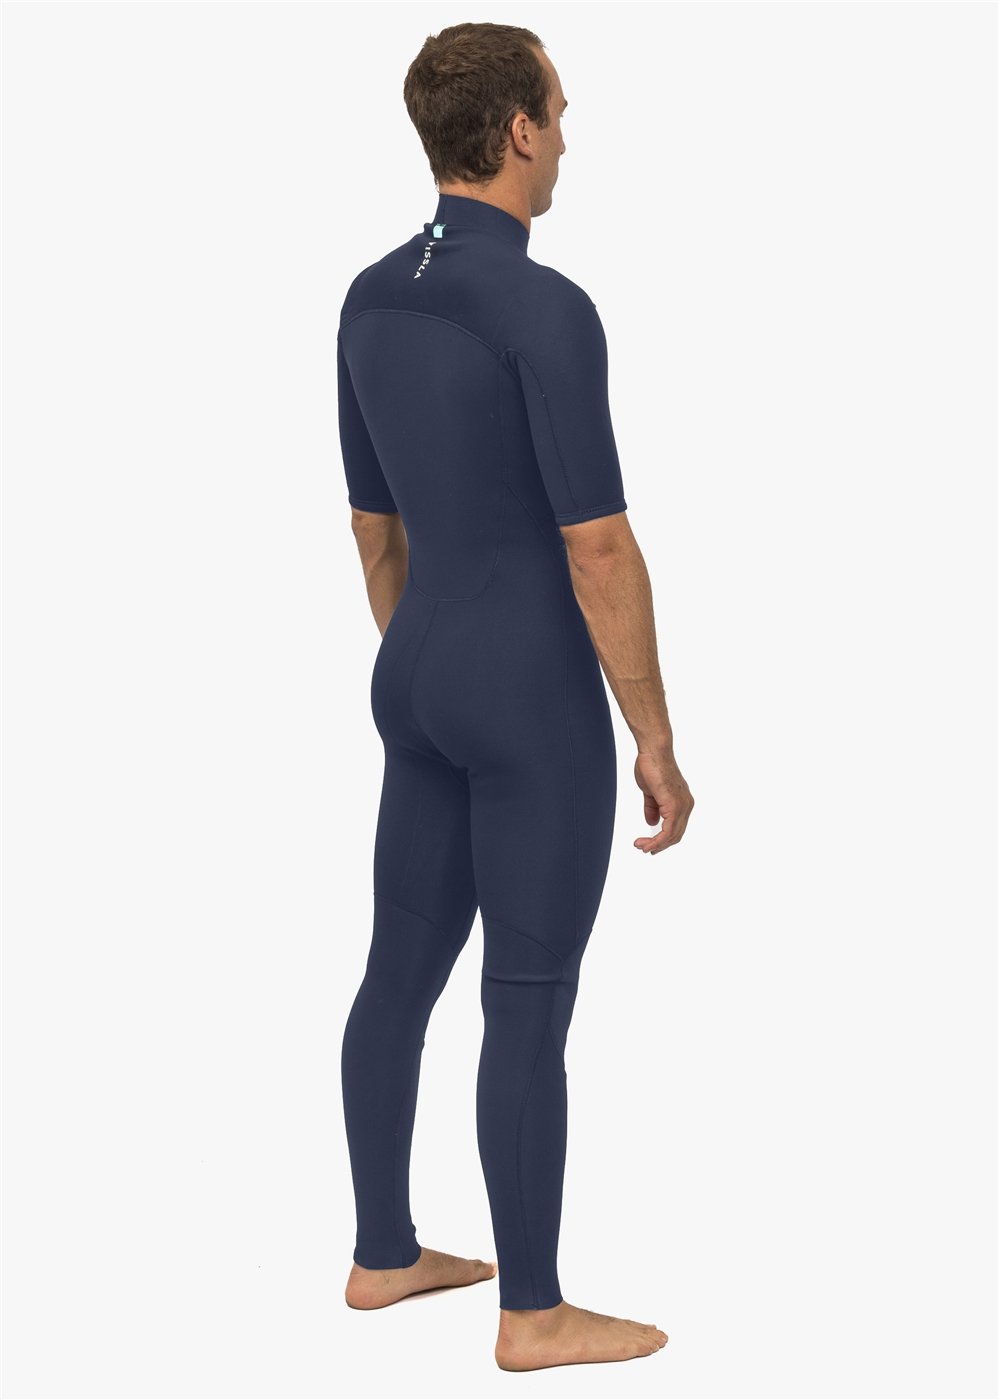 Vissla Men's Wetsuit | 7 Seas 2-2 Short Sleeve SummerSuit – Vissla.com